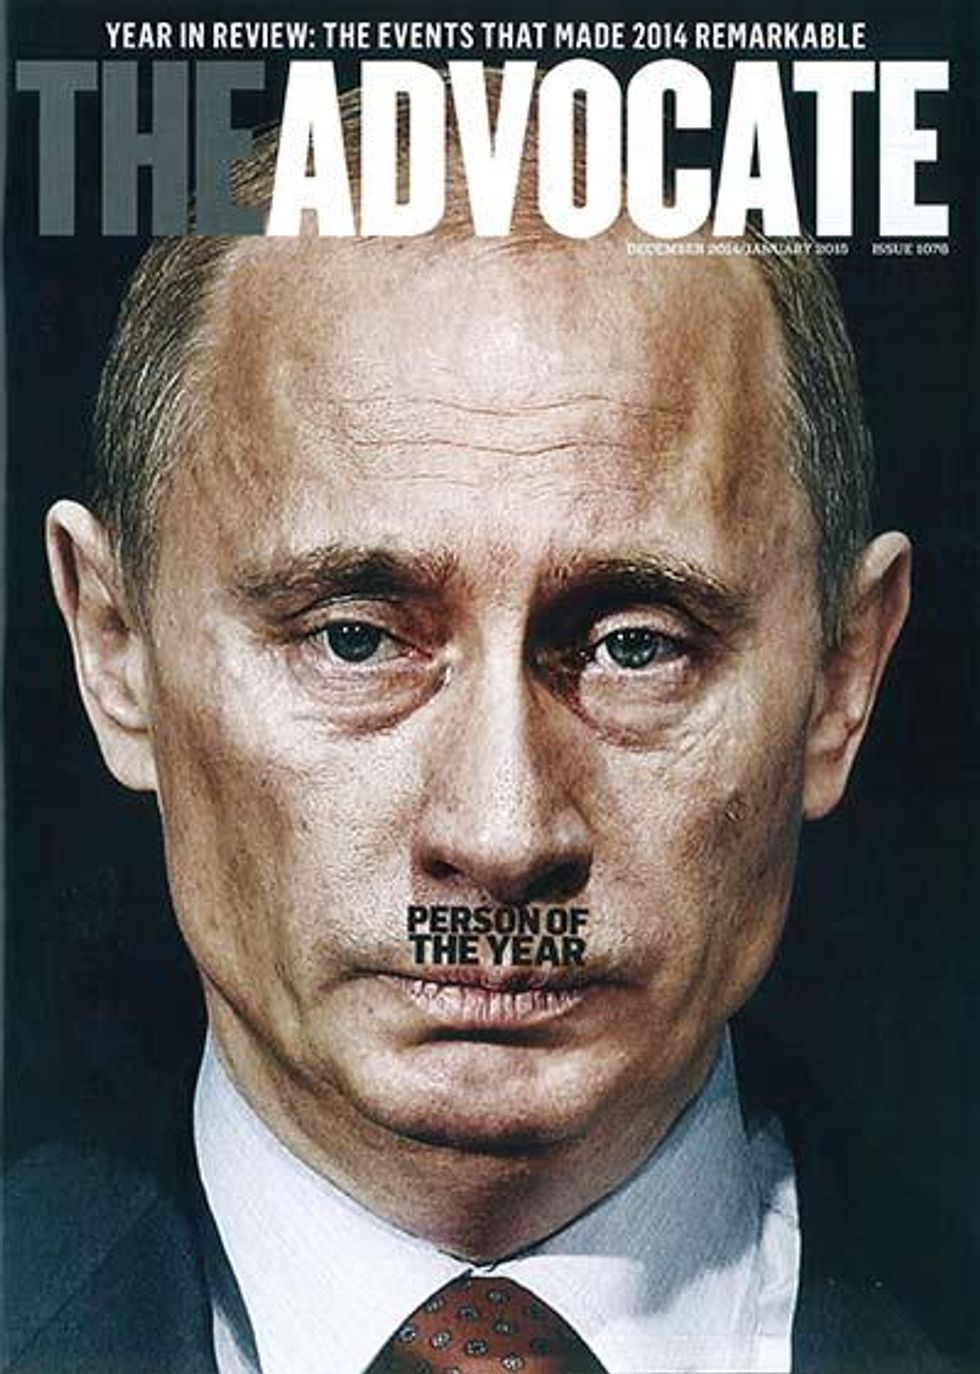 Putin_coverx400